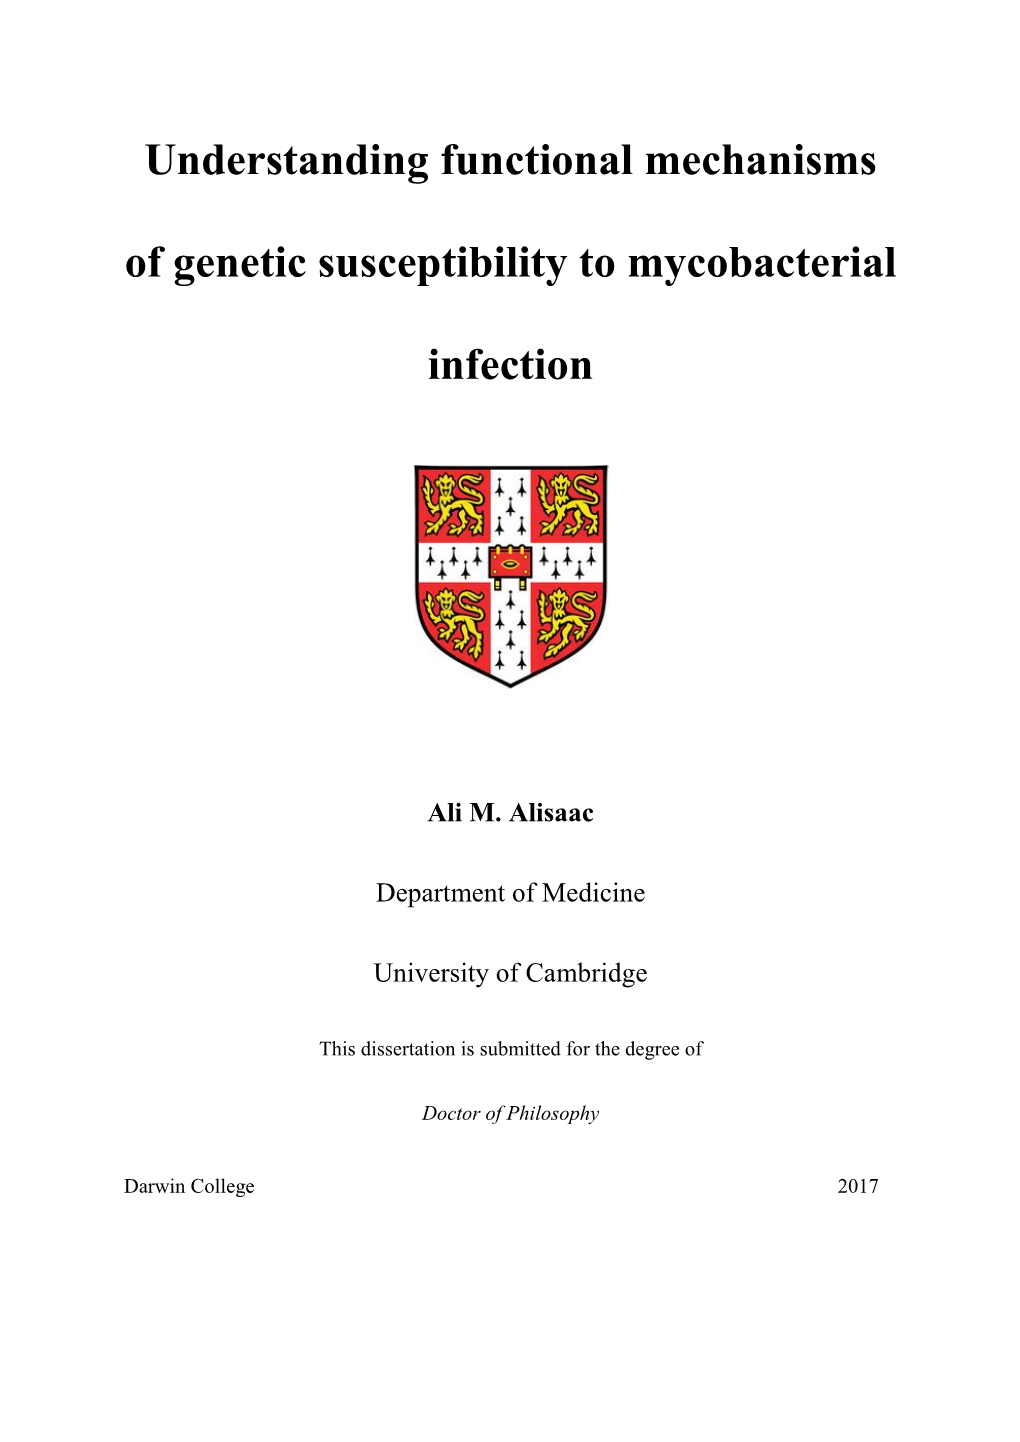 Understanding Functional Mechanisms of Genetic Susceptibility to Mycobacterial